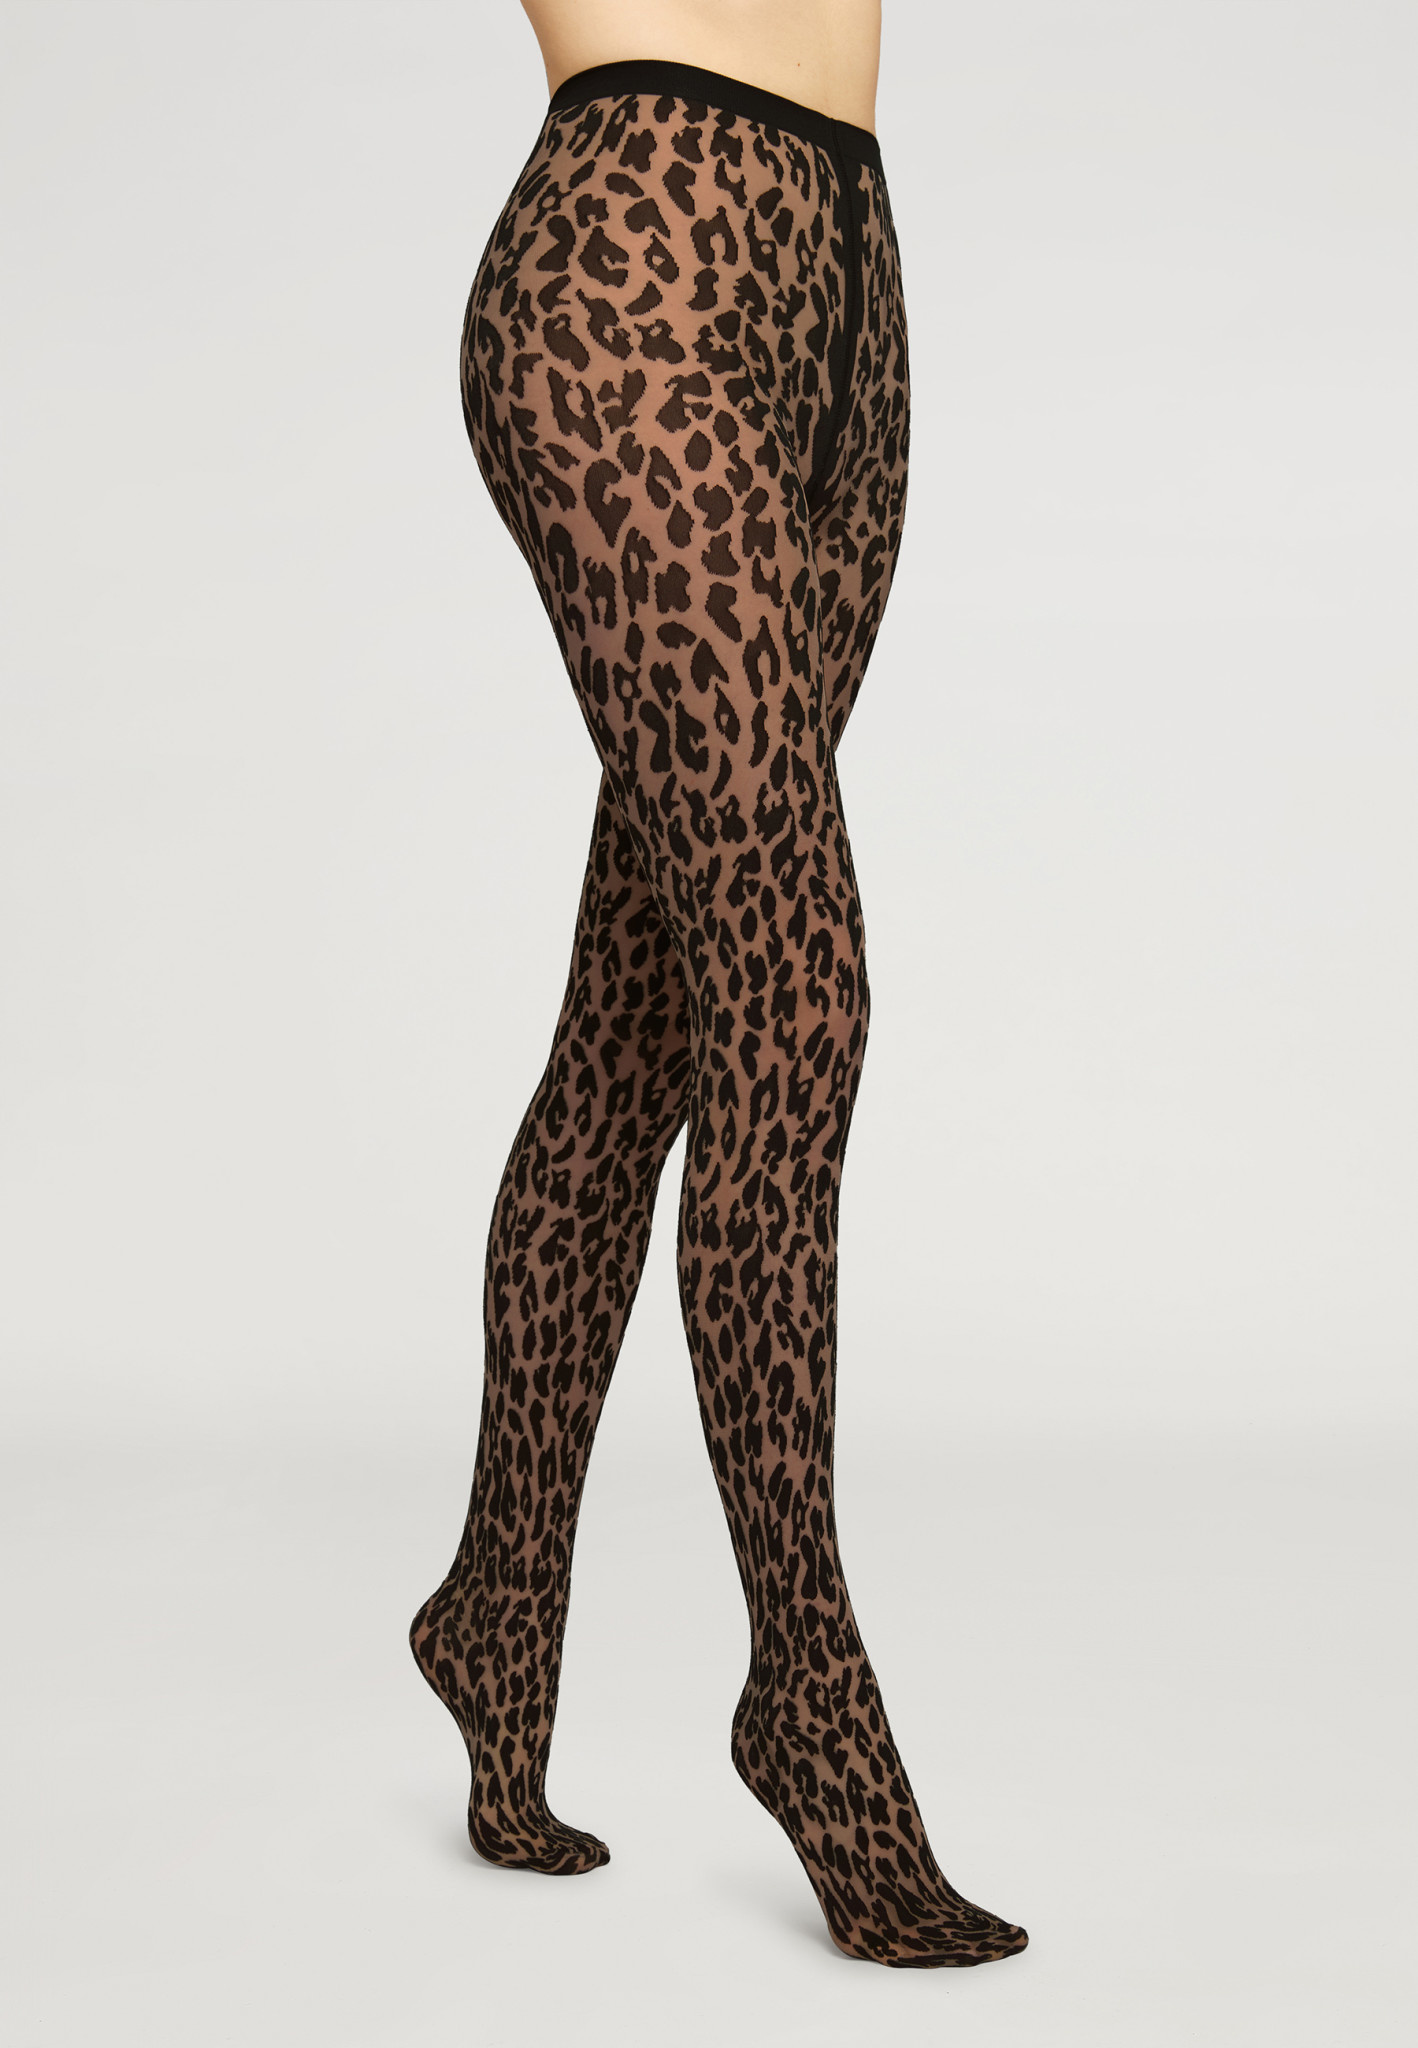 Leopard, tiger, snake & spider animal printed tights at Ireland's online  shop – DressMyLegs